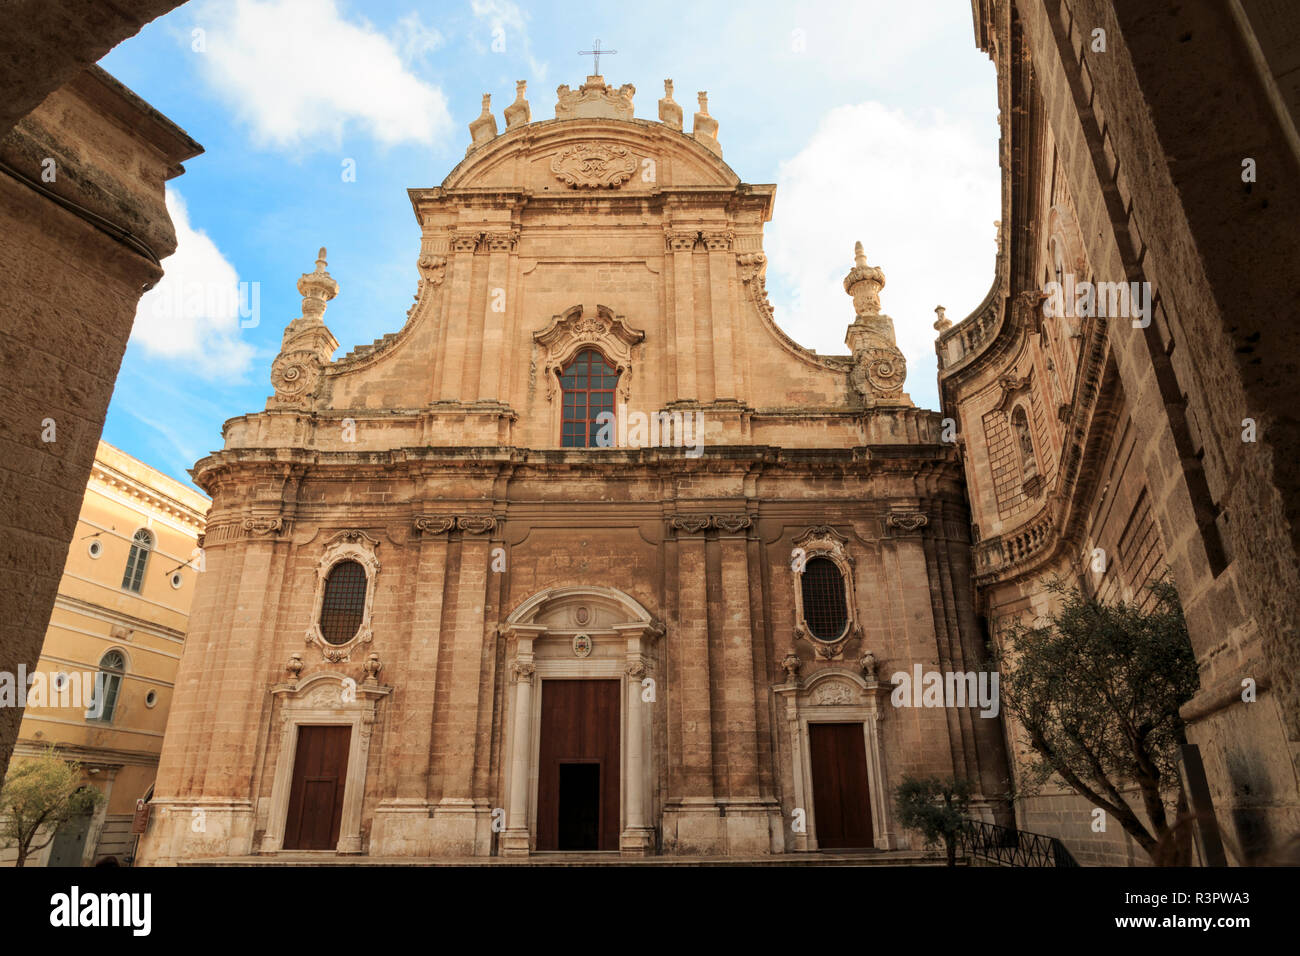 Italy, Bari, Apulia, Monopoli. Roman Catholic Cathedral, the Basilica of the Madonna della Madia or Santa Maria della Madia. Stock Photo